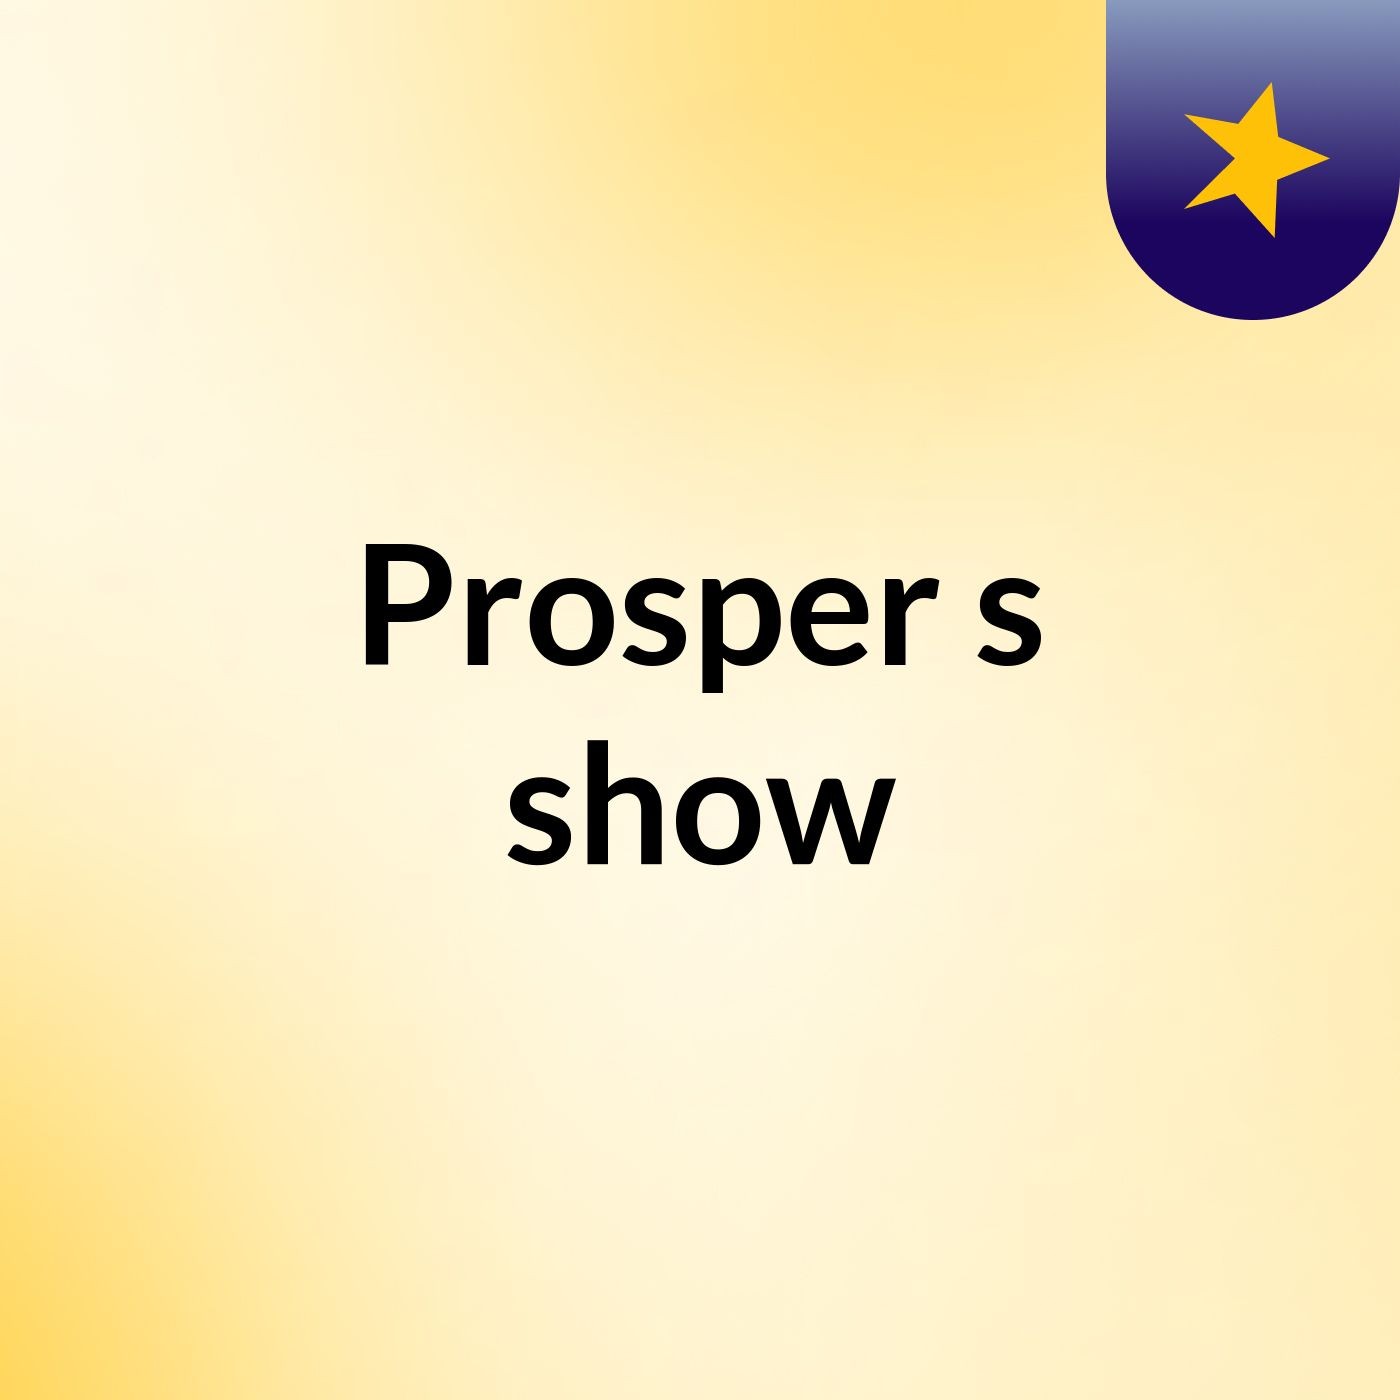 Prosper's show